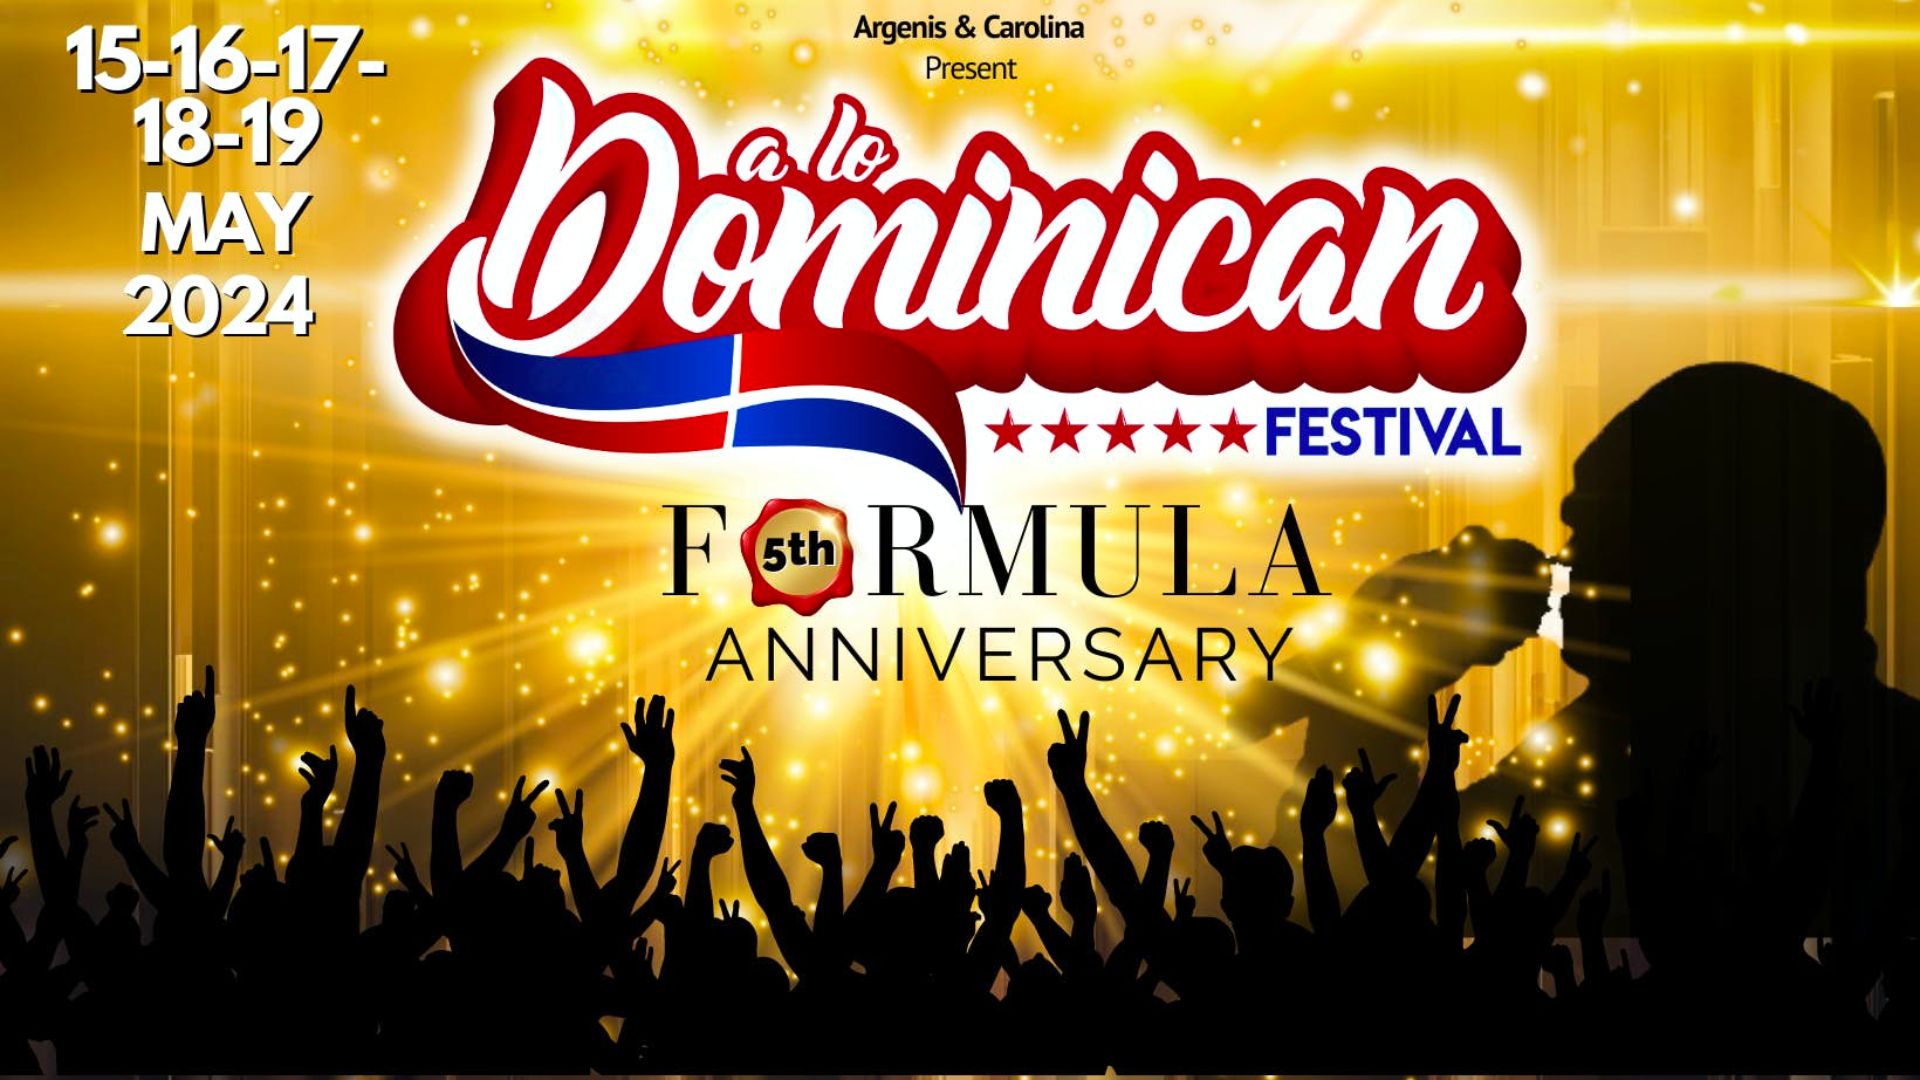 A Lo Dominican Bachata Festival 2024 bachataloves.me the best